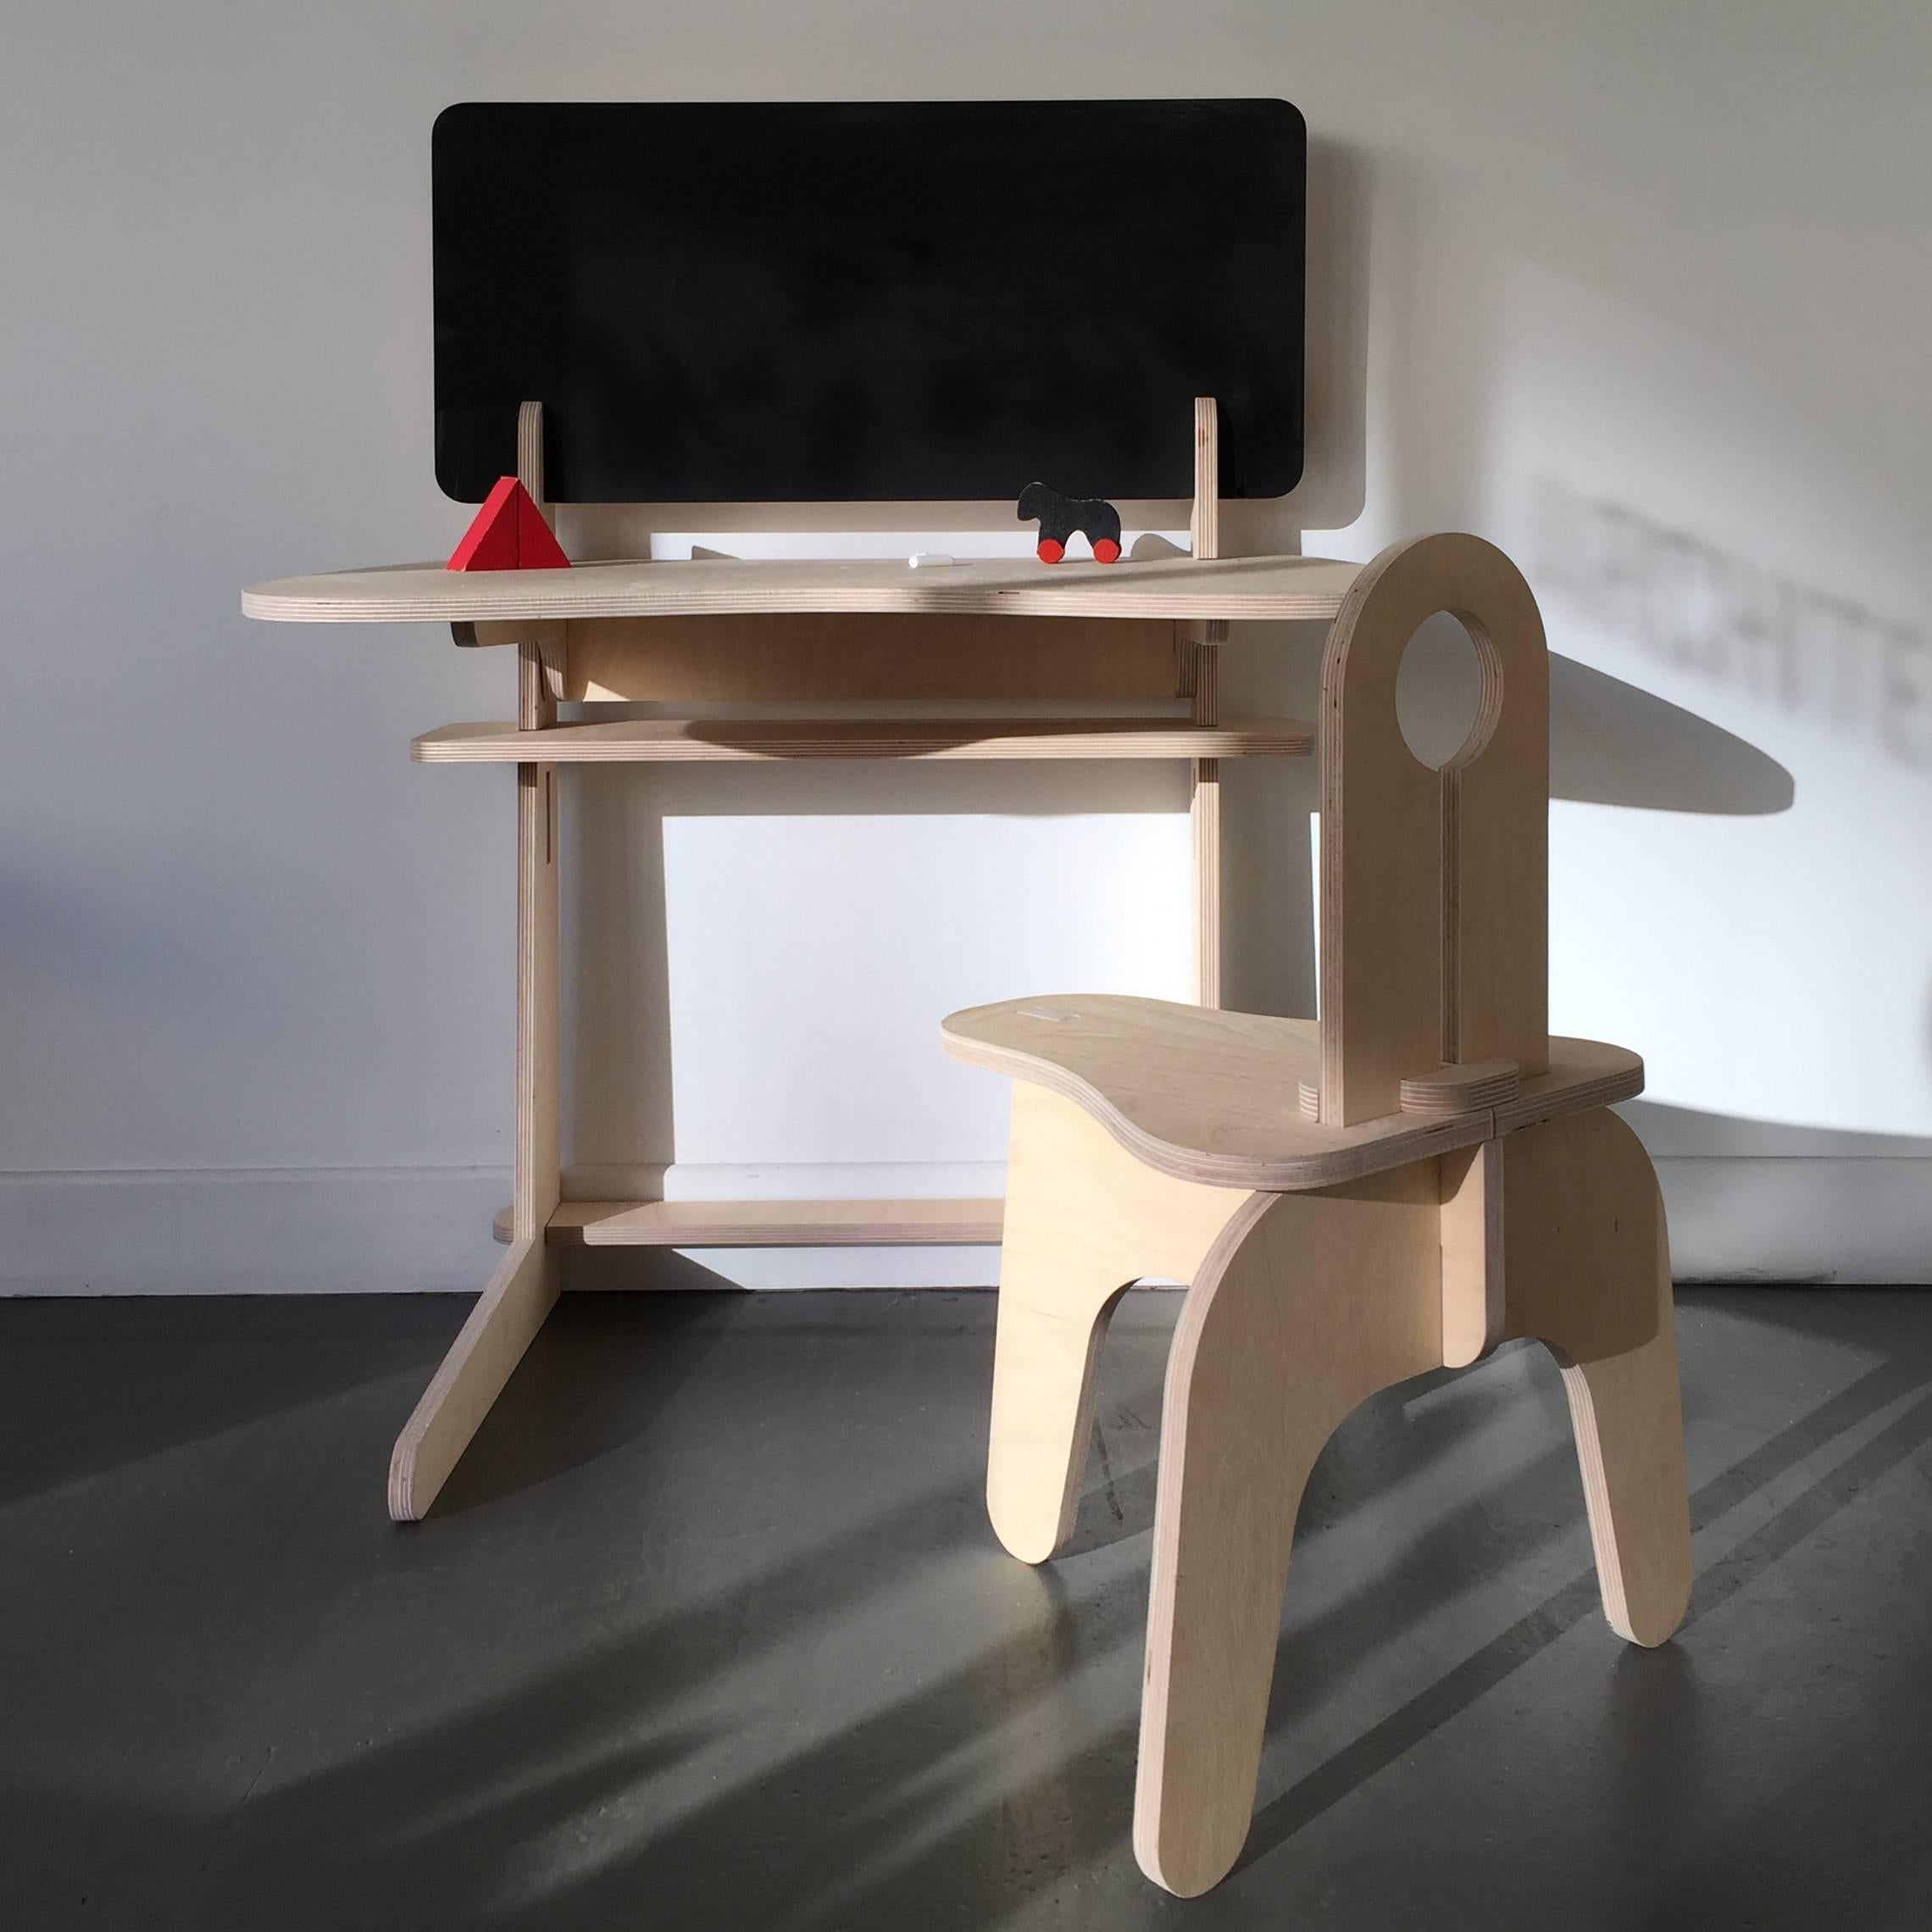 French Biwo Adjustable Desk with Blackboard by Makémaké, Contemporary, France, 2017 For Sale